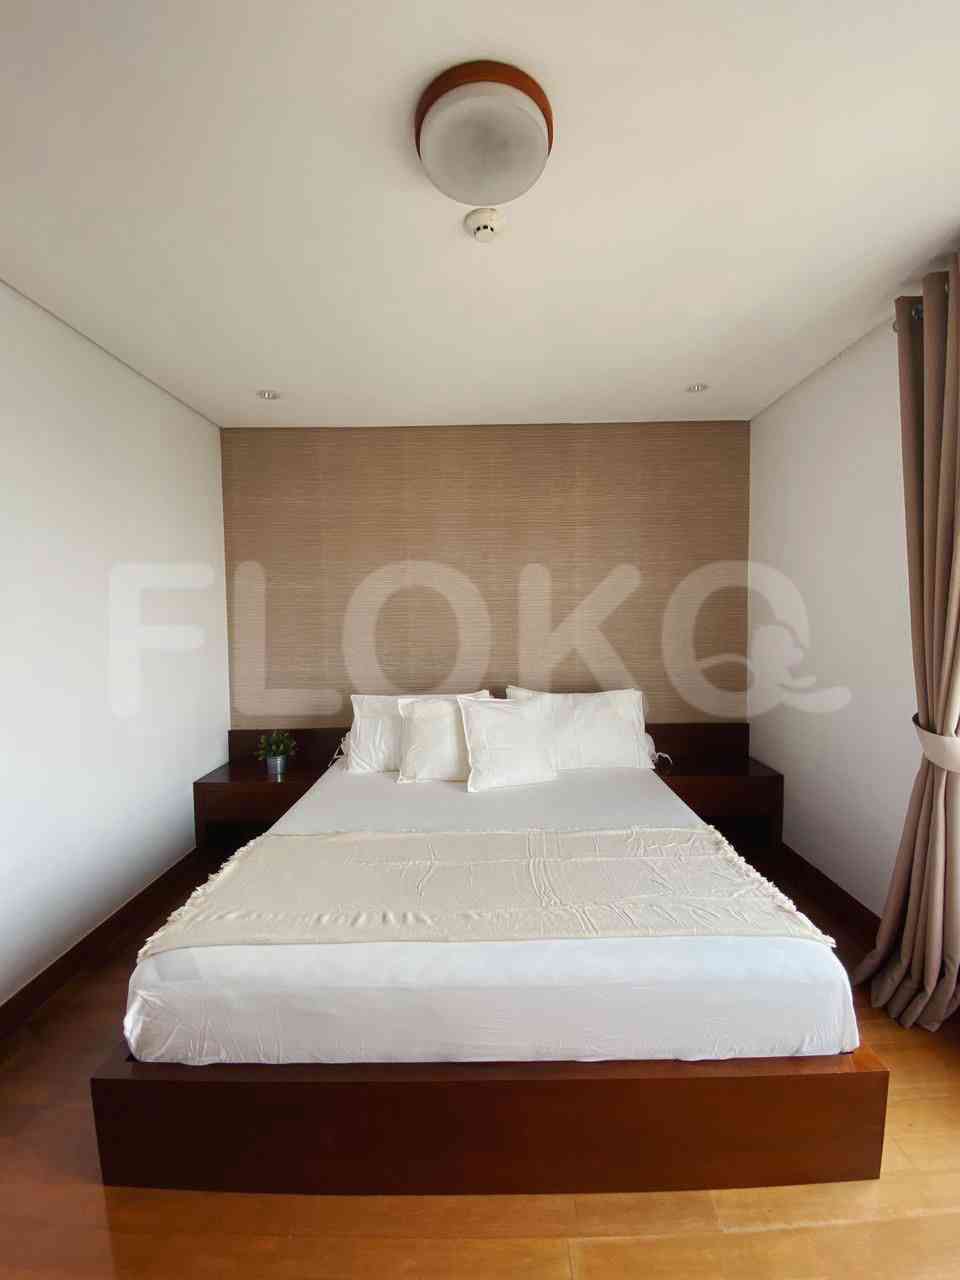 4 Bedroom on 26th Floor for Rent in Permata Hijau Suites Apartment - fpef10 3